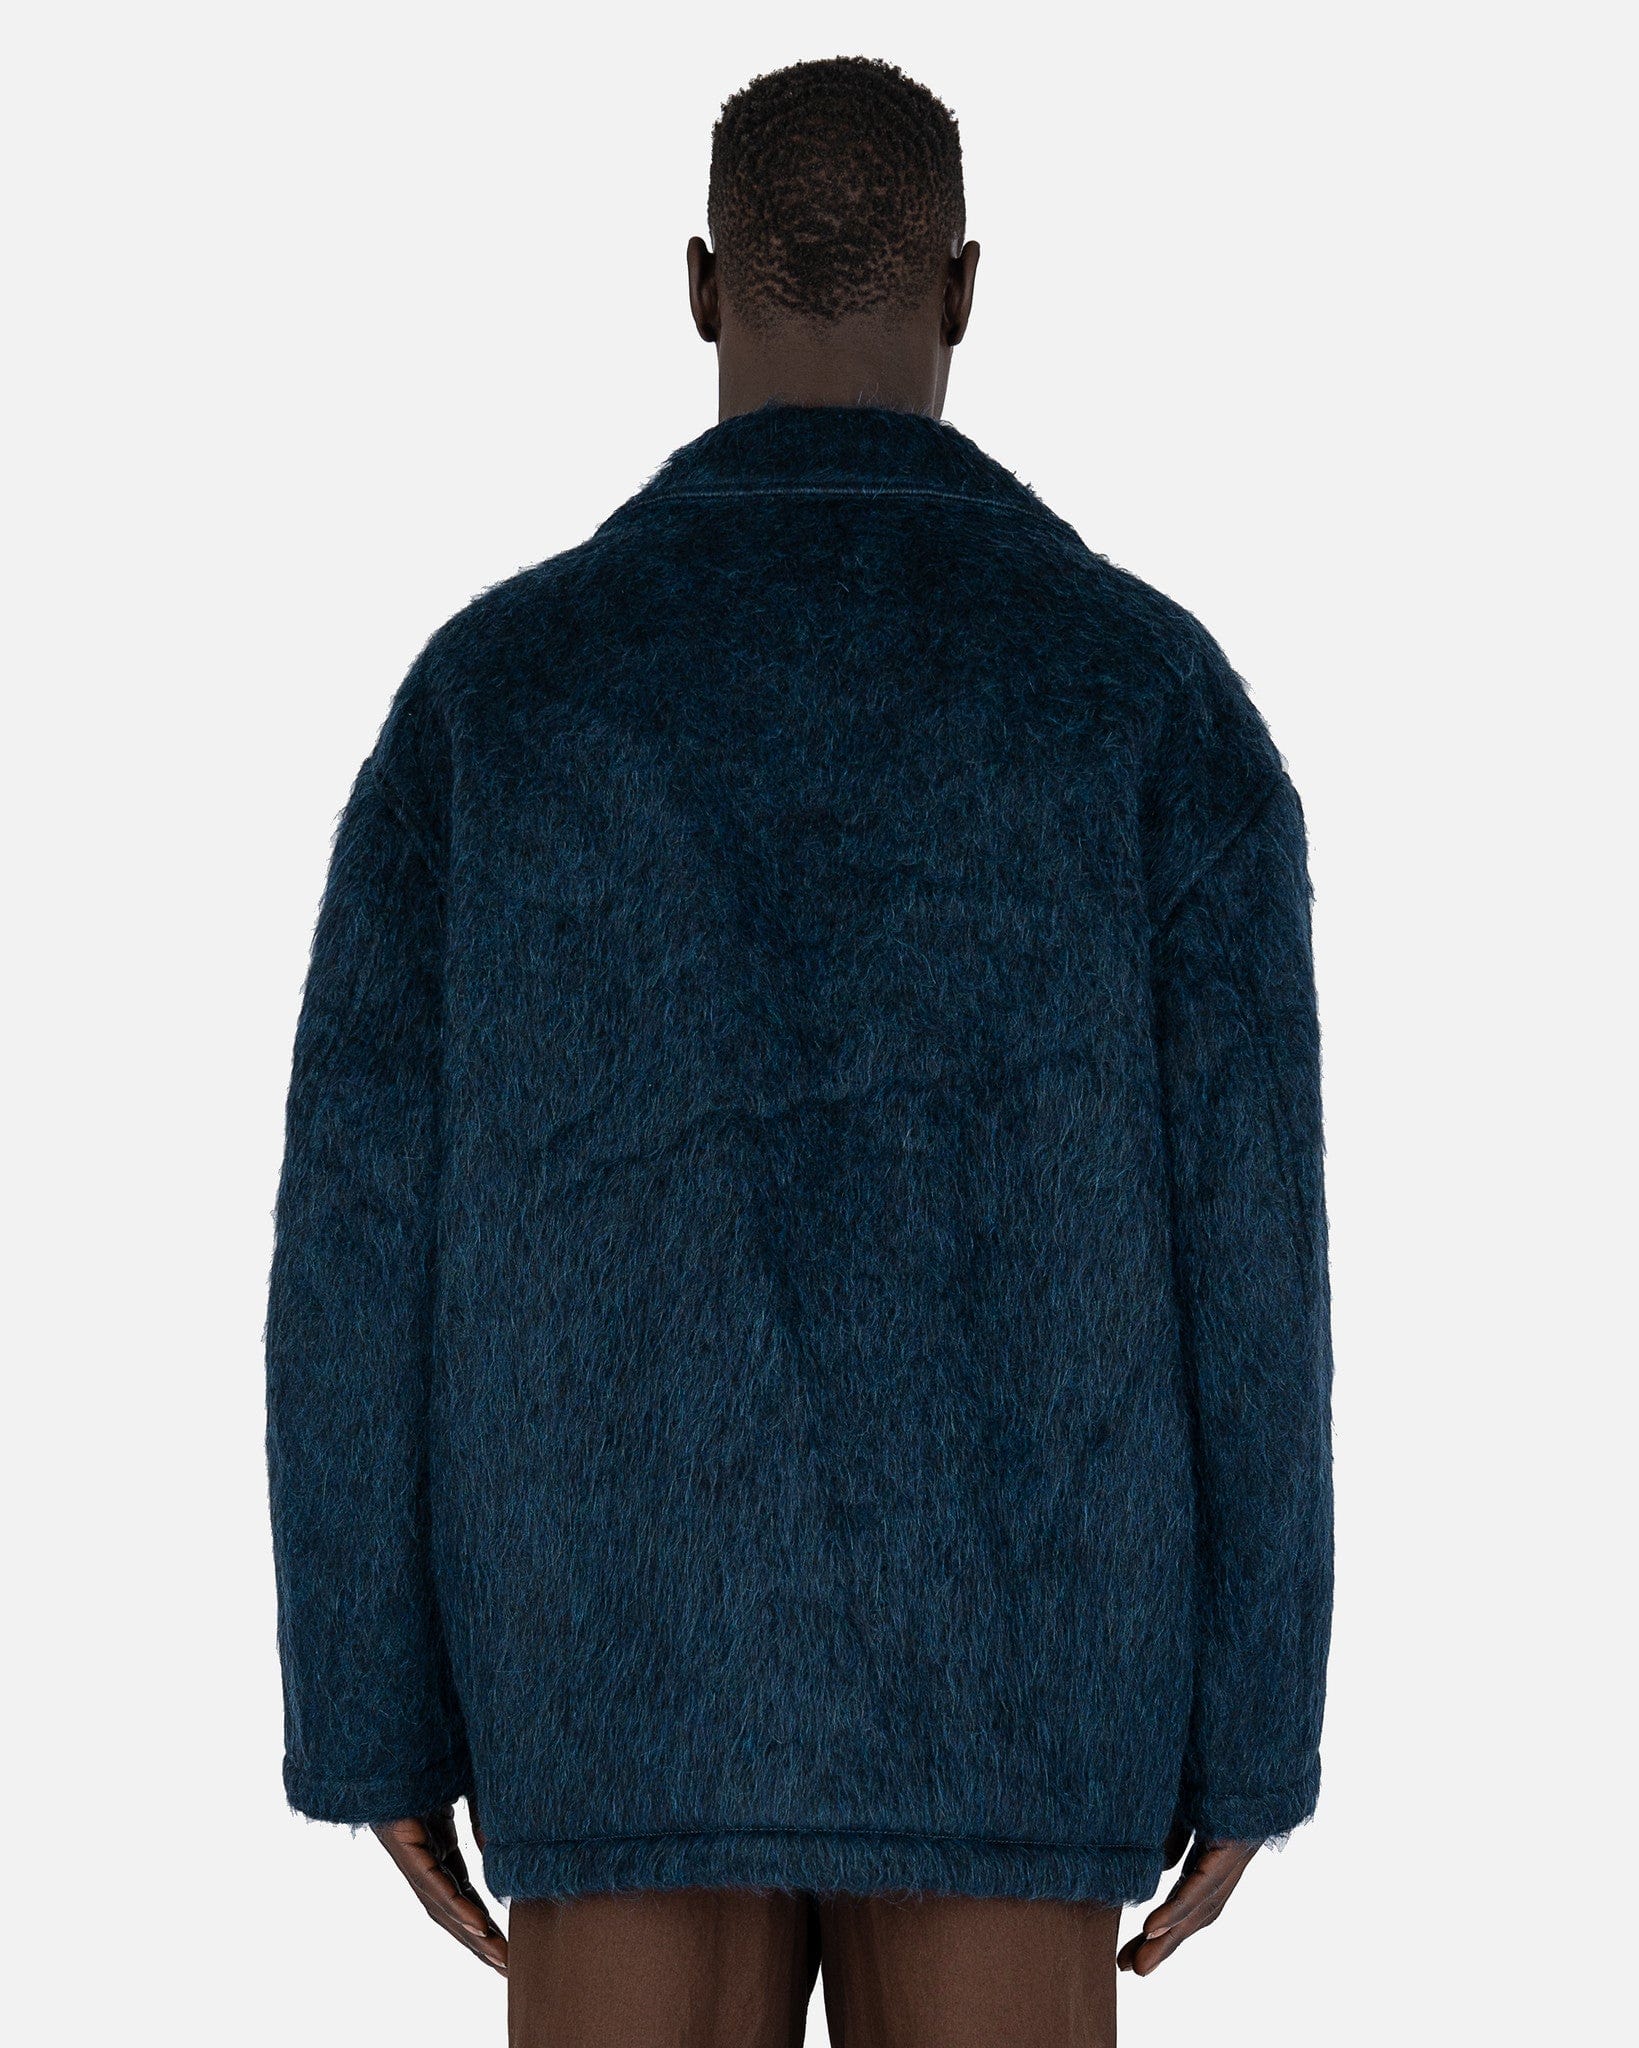 Marni Men's Jackets Brushed Wool Coat in Ink